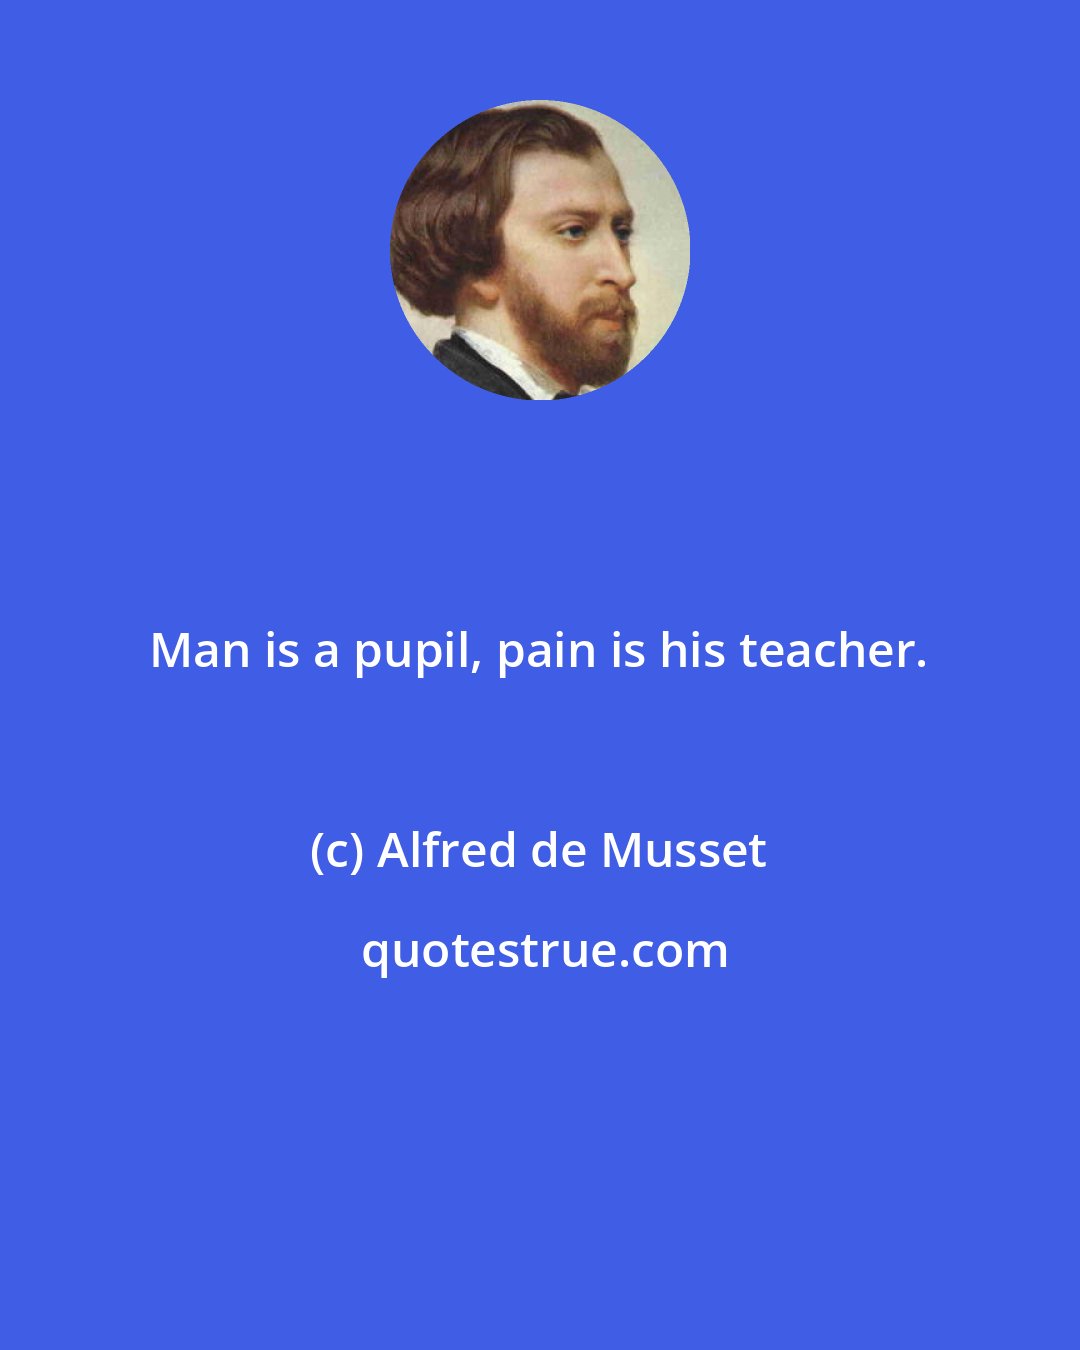 Alfred de Musset: Man is a pupil, pain is his teacher.